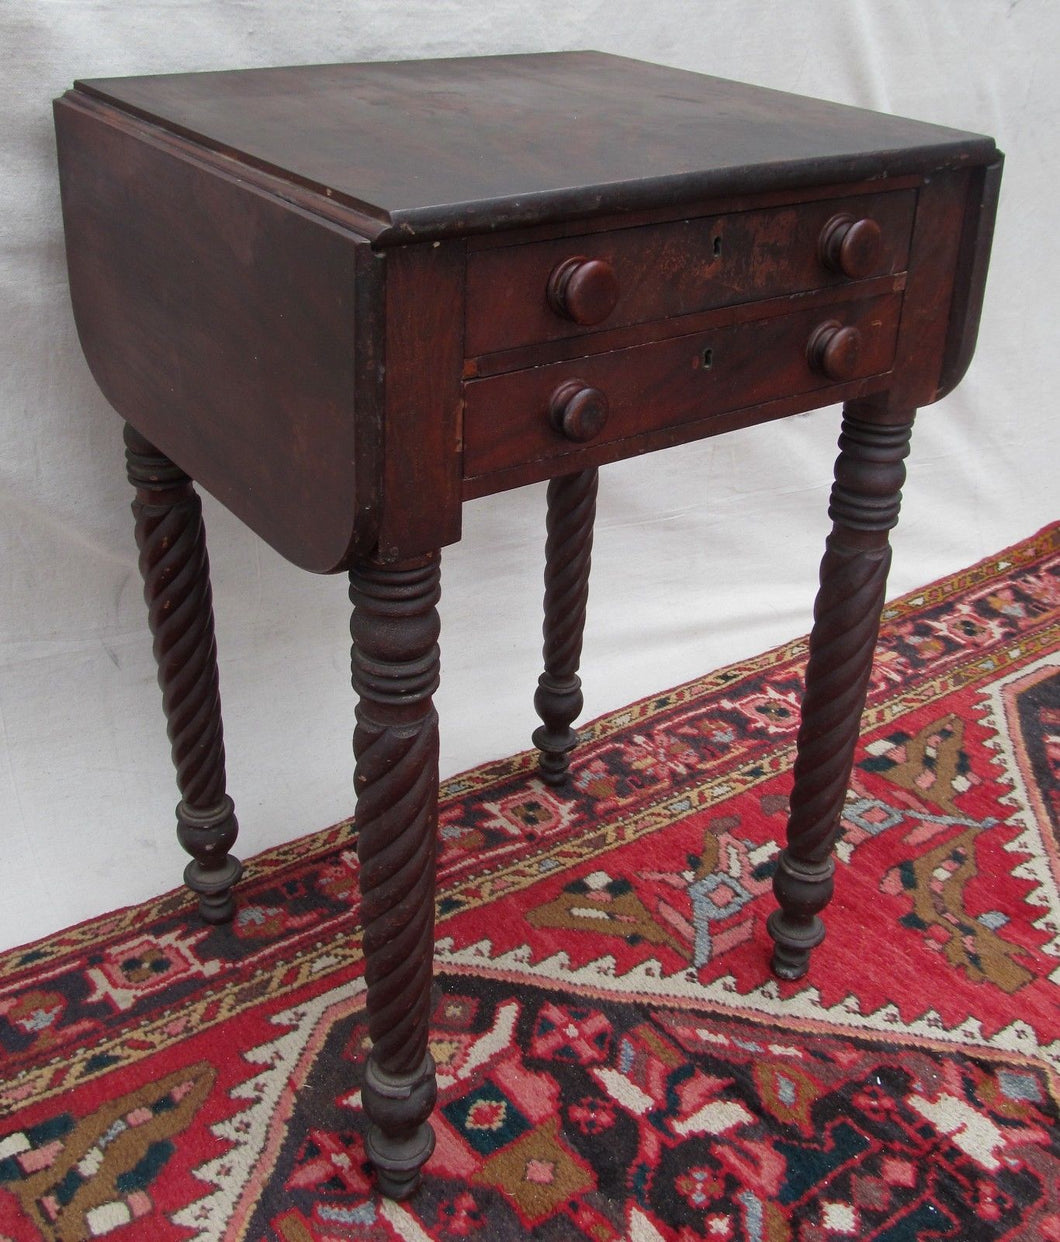 SHERATON MAHOGANY ROPE CARVED WORK TABLE-BOSTON- ALL ORIGINAL CIRCA 1810 - 1820